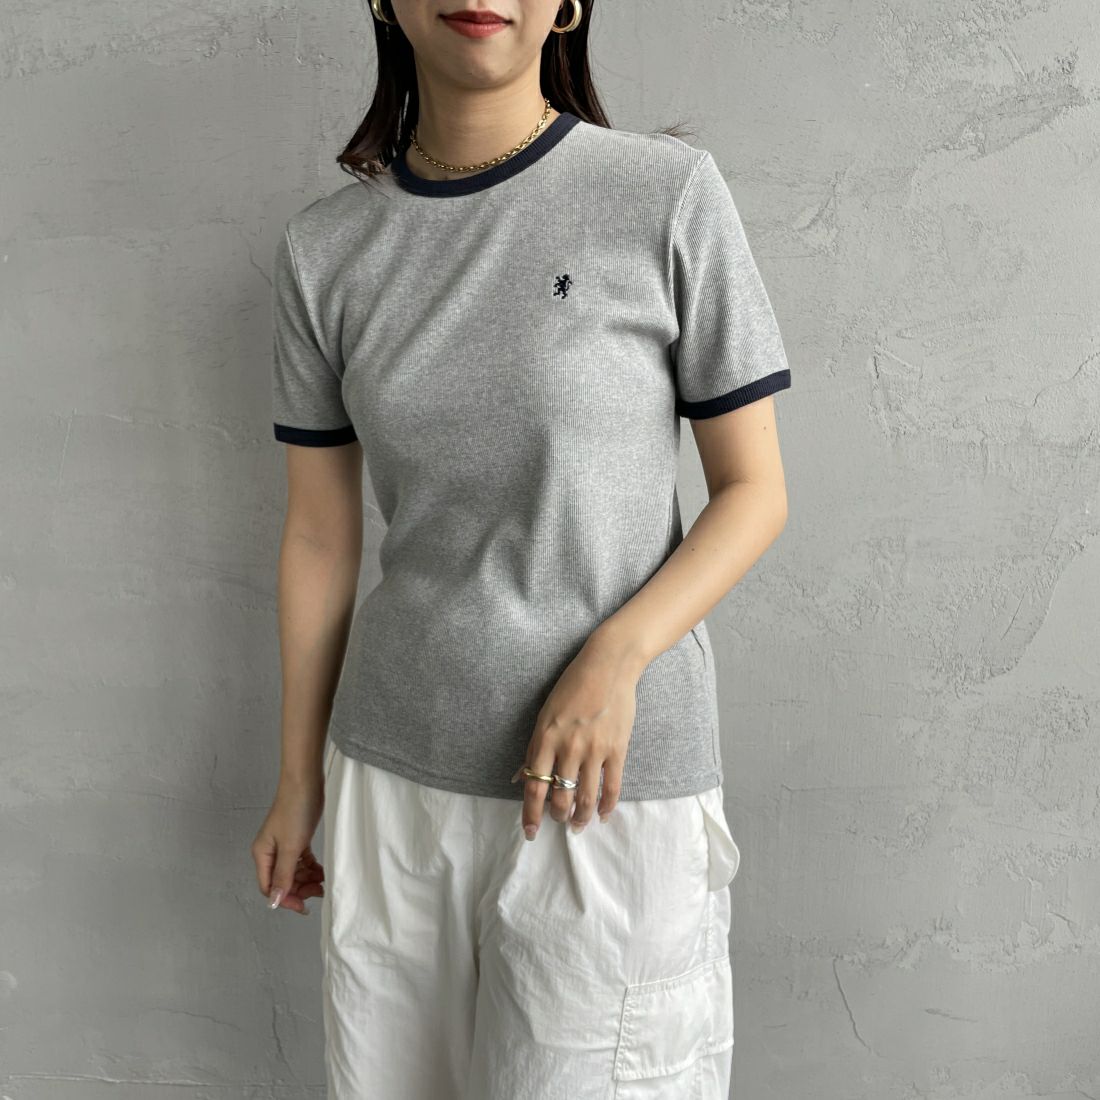 Gymphlex [ジムフレックス] クルーネックリンガーTシャツ [GY-C0326VRL] H.GRY/NVY &&モデル身長：163cm 着用サイズ：14&&